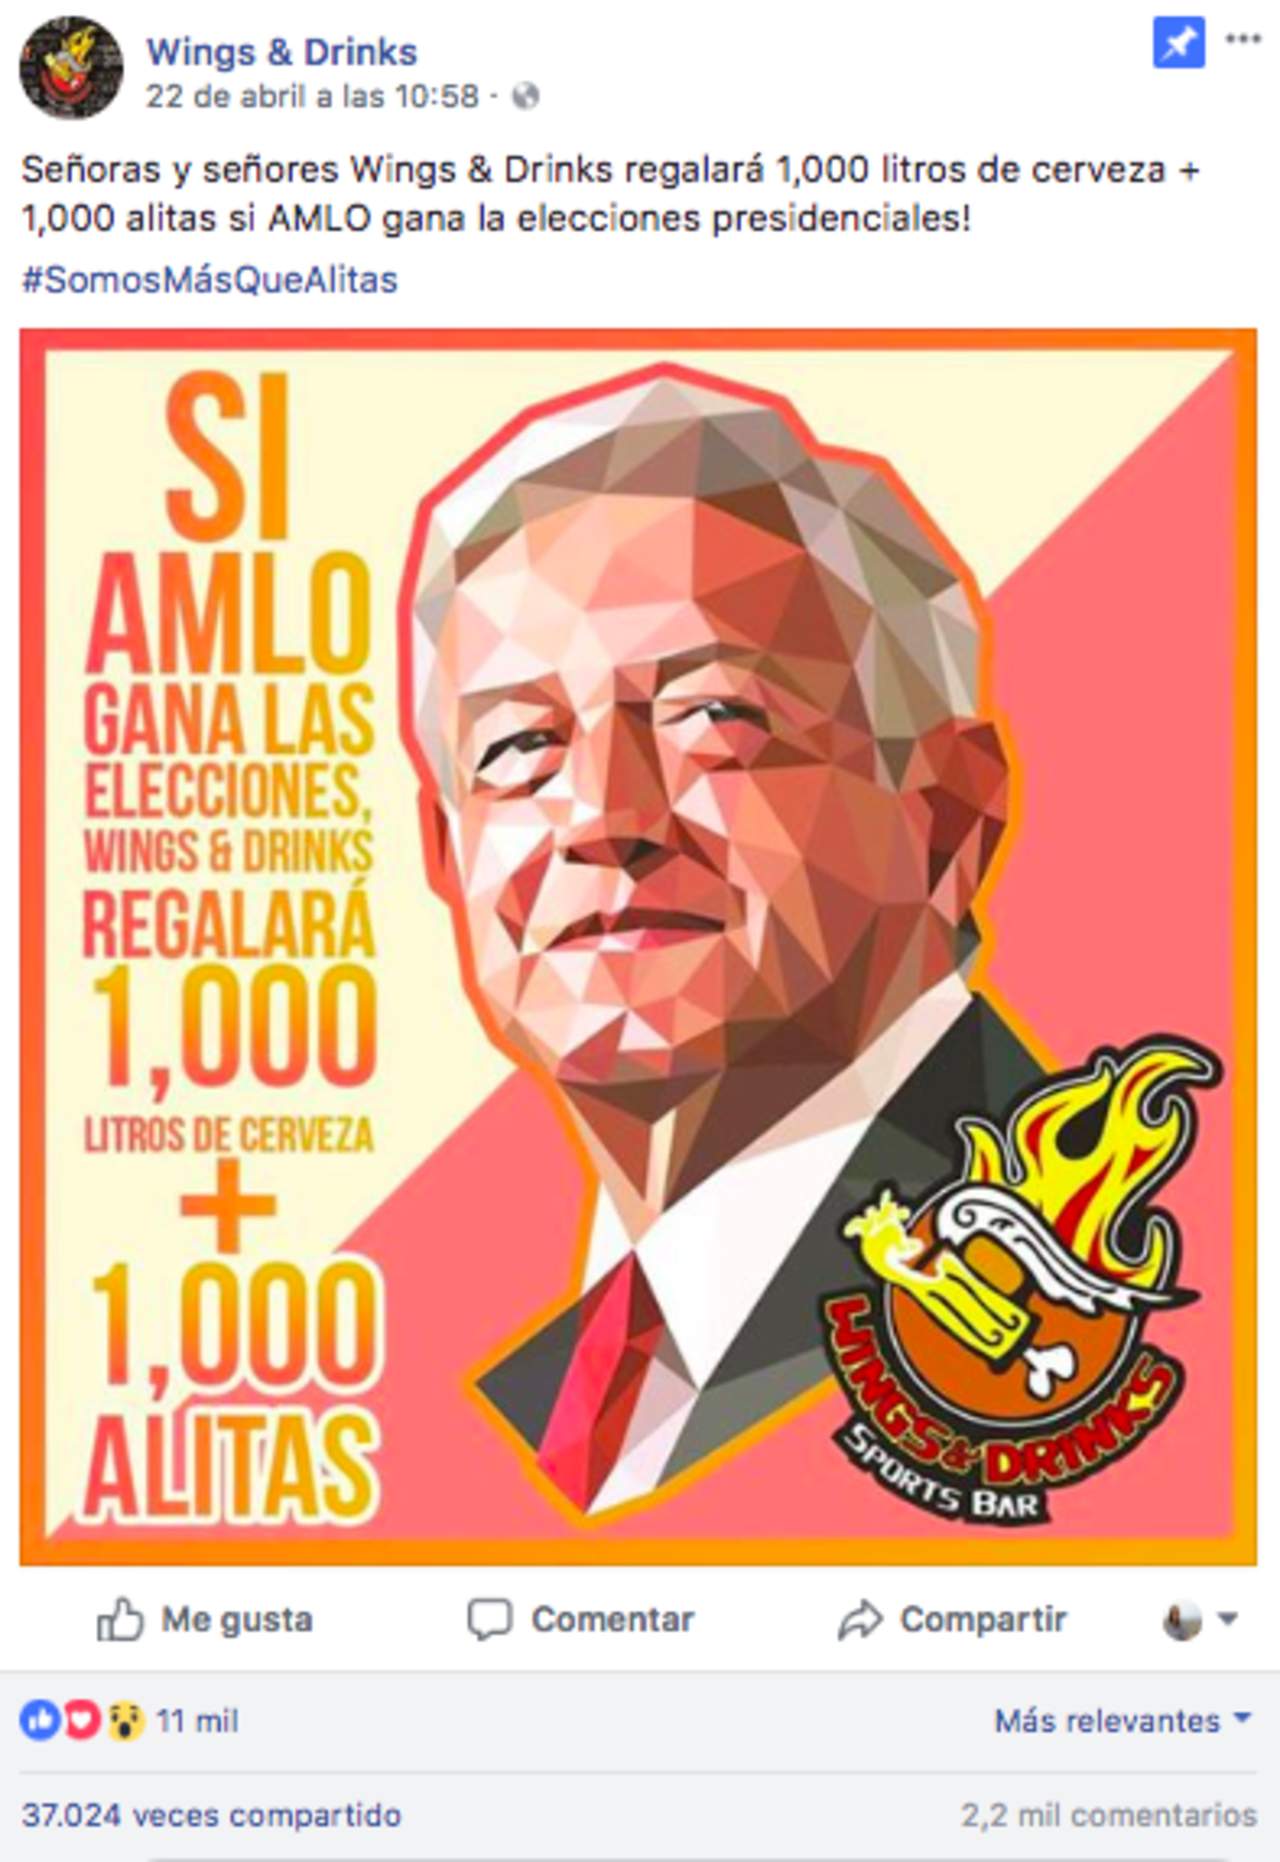 Varios locales ofrecen comida o servicios gratis si gana López Obrador, pero ¿es legal?